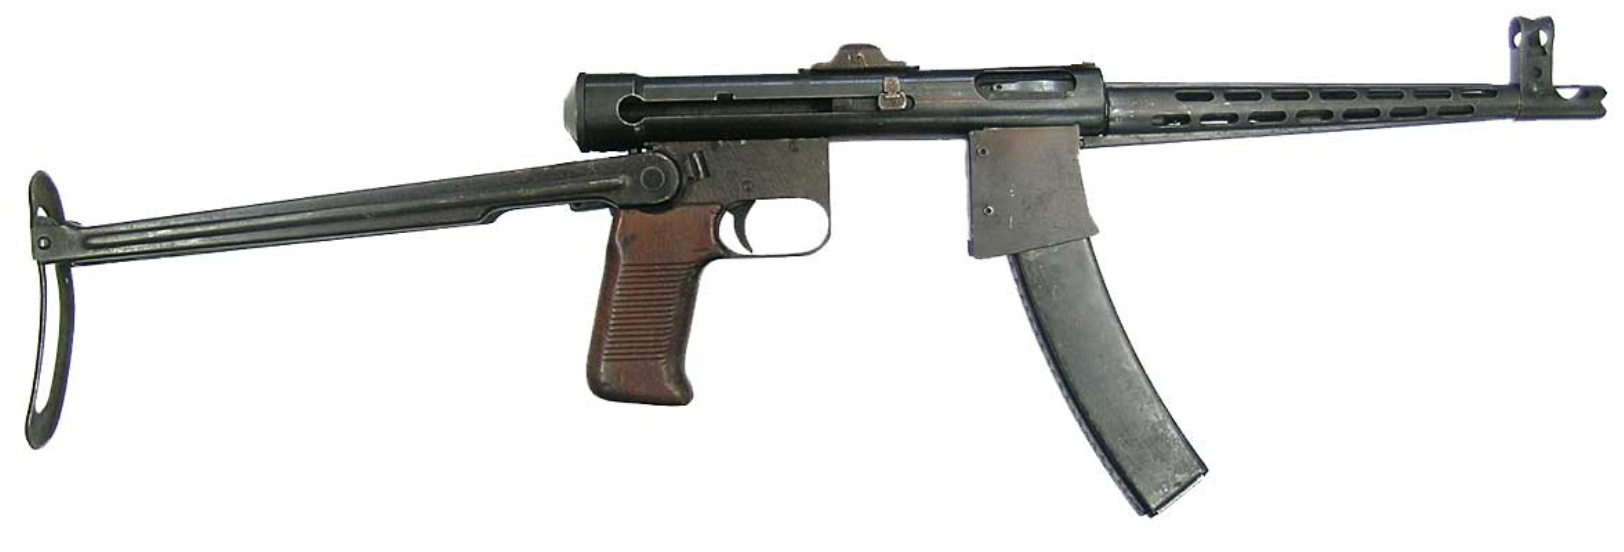 Kucher K1 | Gun Wiki | Fandom